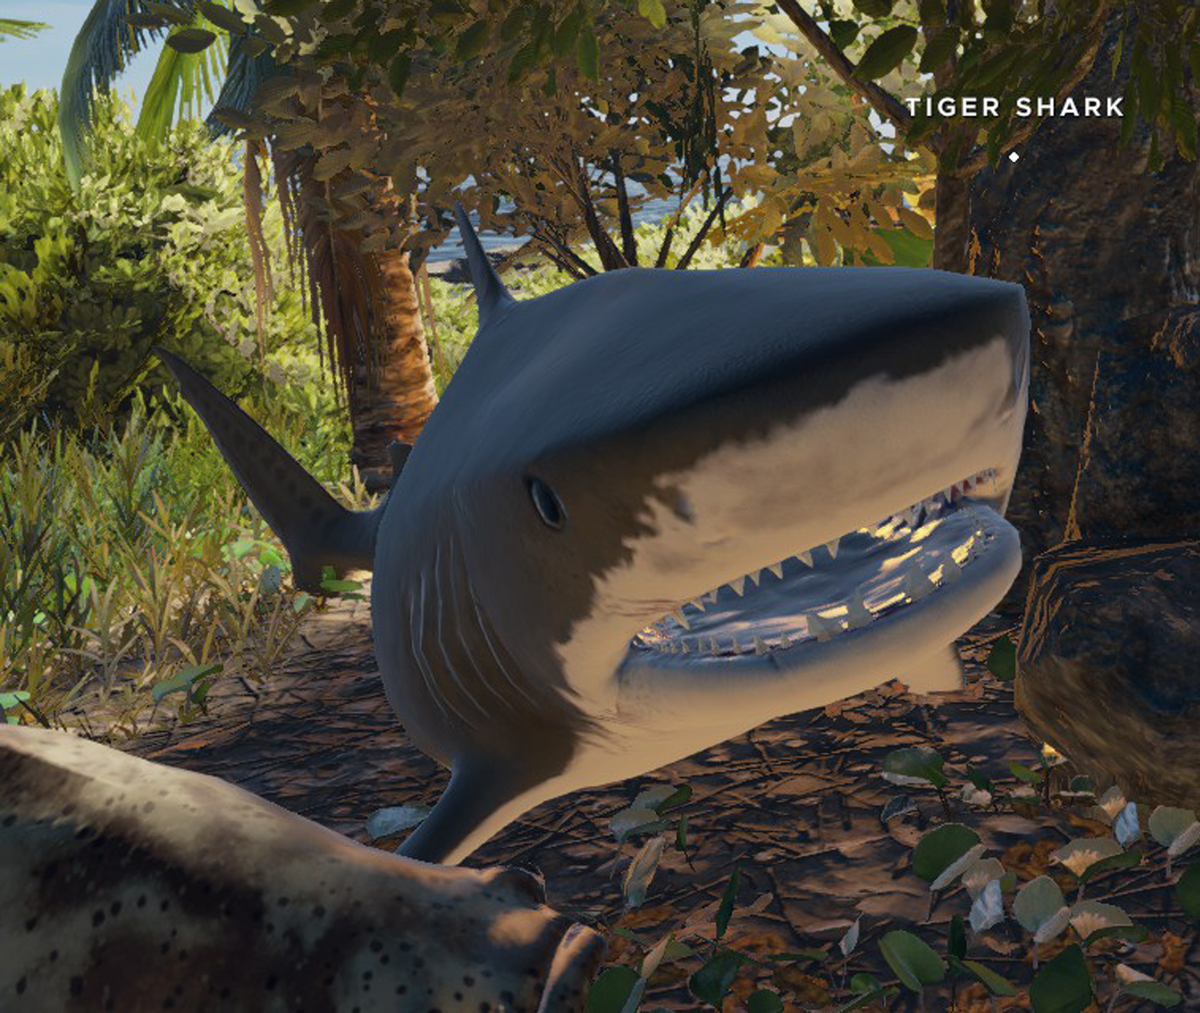 Killed My First Shark!! : r/strandeddeep